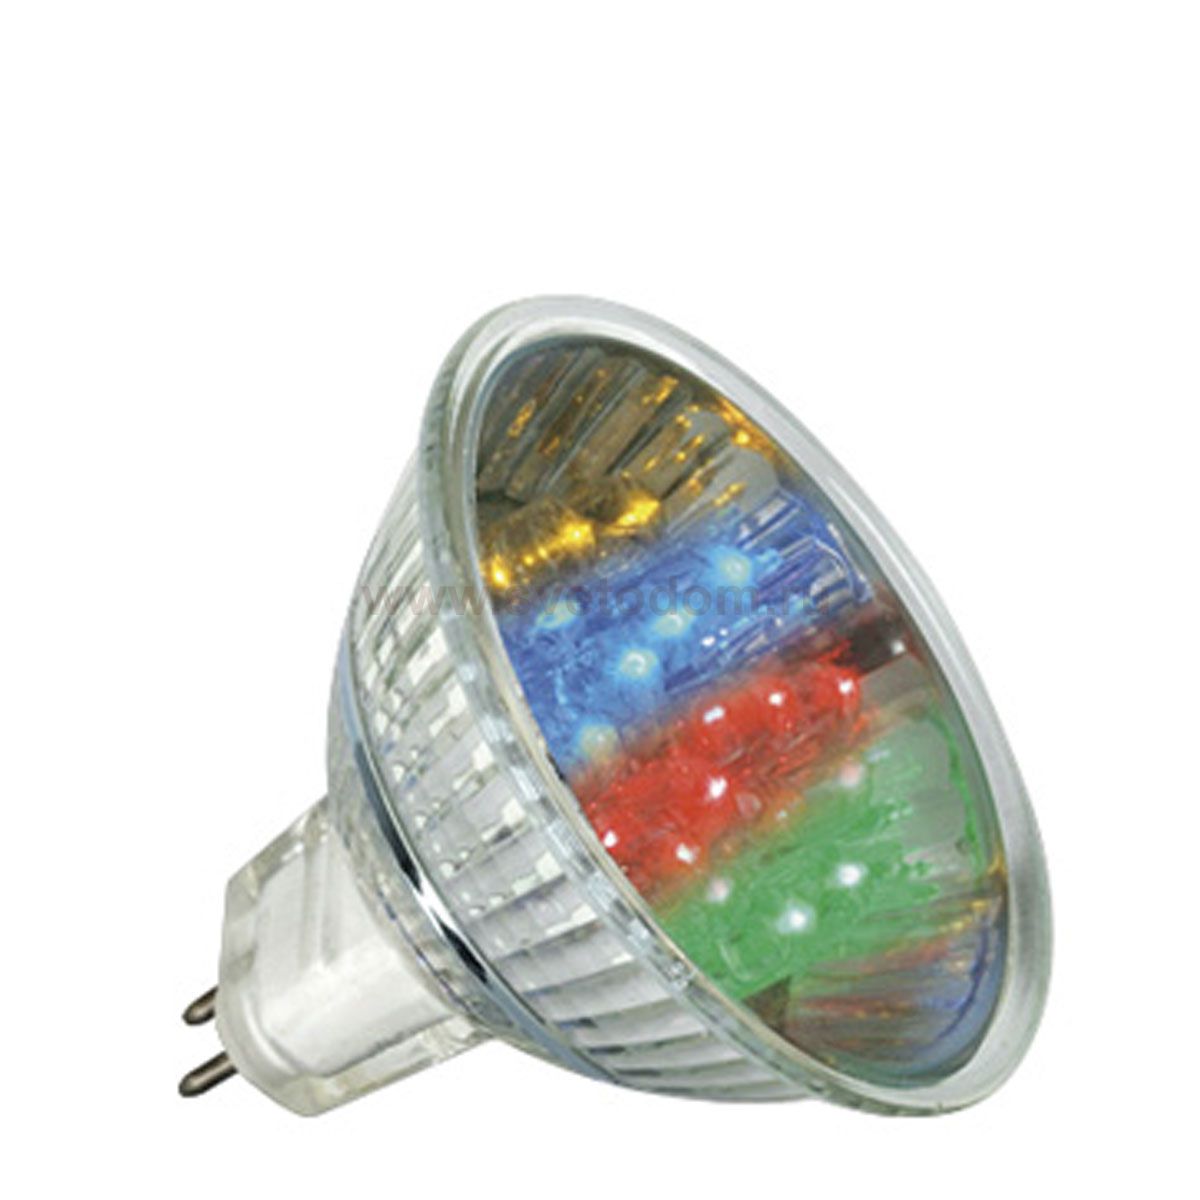 Лампа светодиодная 5.3 12v. Gu5.3 светодиодная лампа 220. Лампа светодиодная gu5.3 mr16-3-1w-w. Gu5.3 светодиодная лампа 220 яркая. RGB лампа 220 mr16 gu5.3.